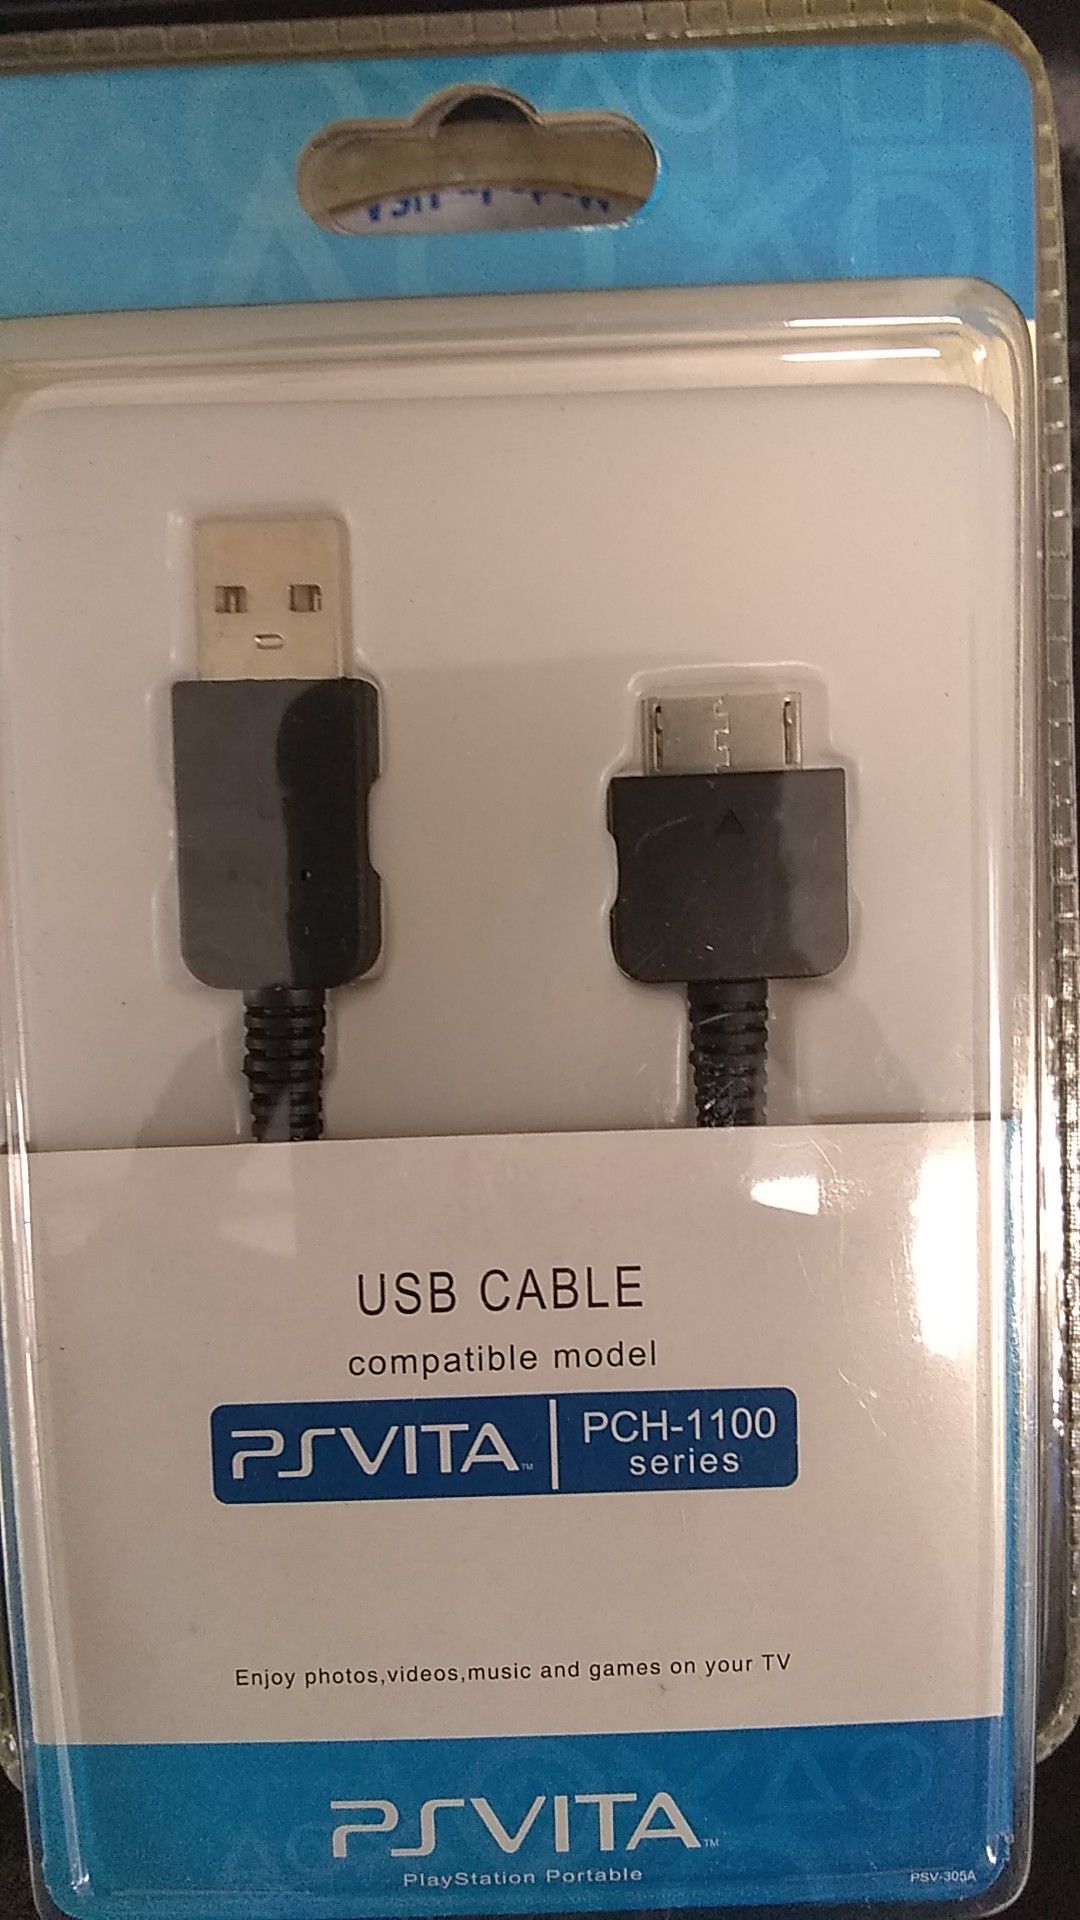 PS VITA USB CABLE PCH-1100 series!!!